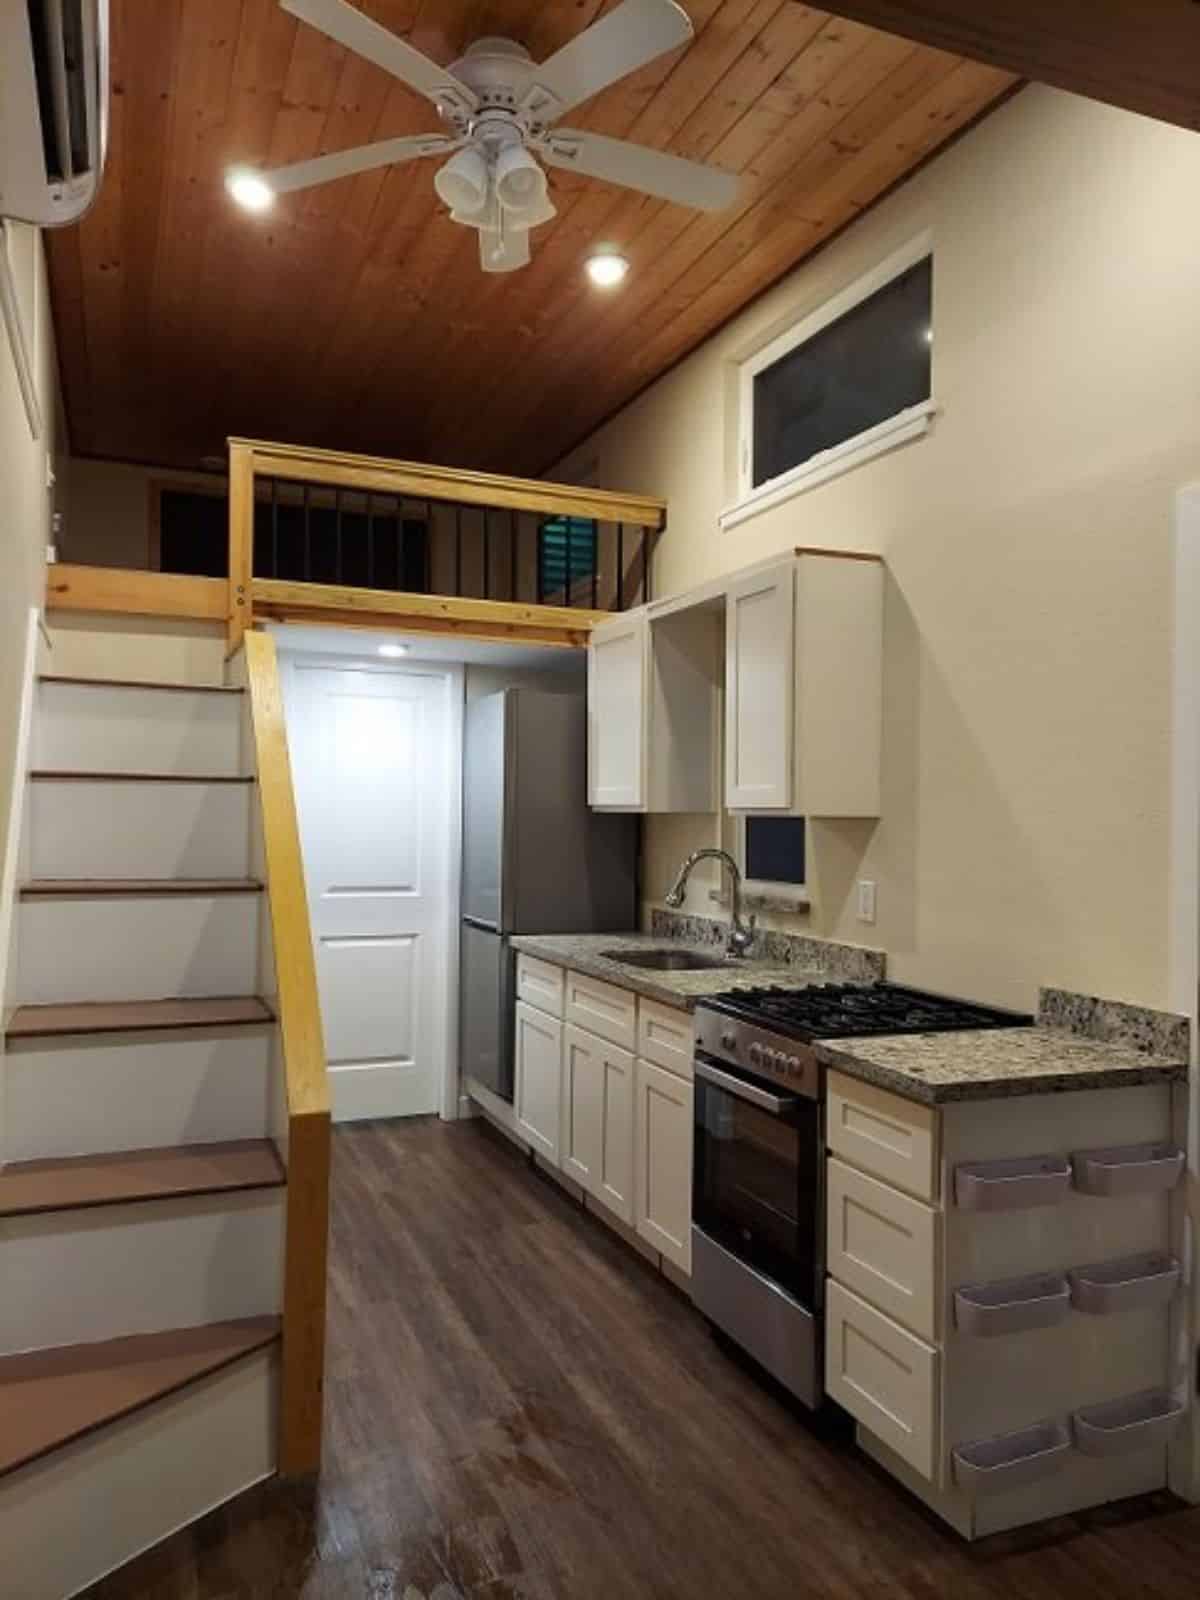 Kitchen area of 24’ tiny house on wheels